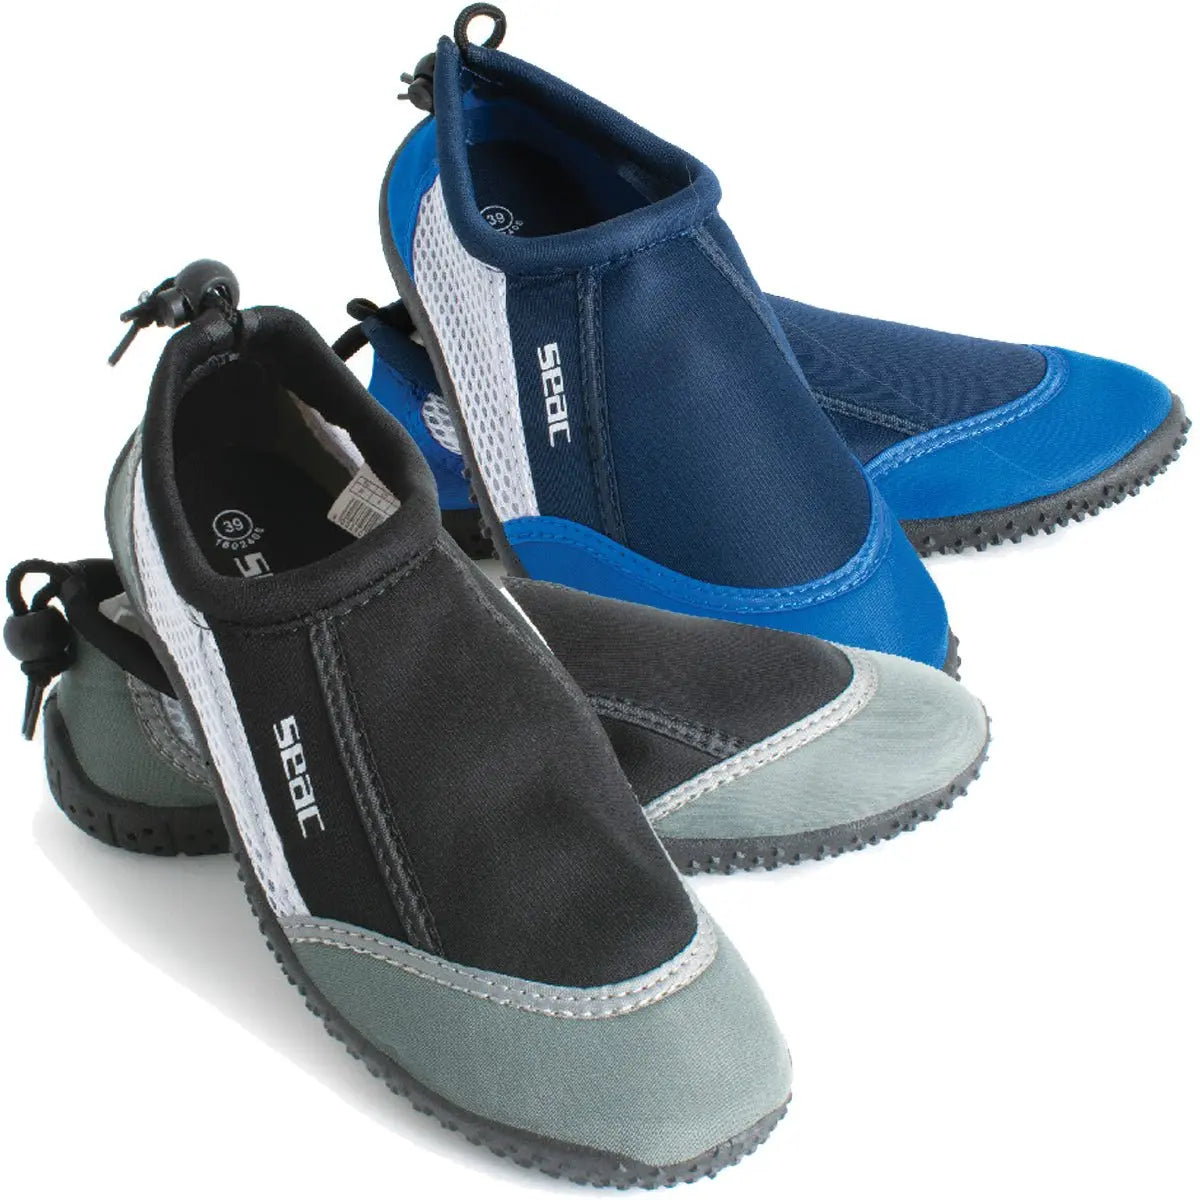 Booties & Water Shoes | Step into Aquatic Comfort